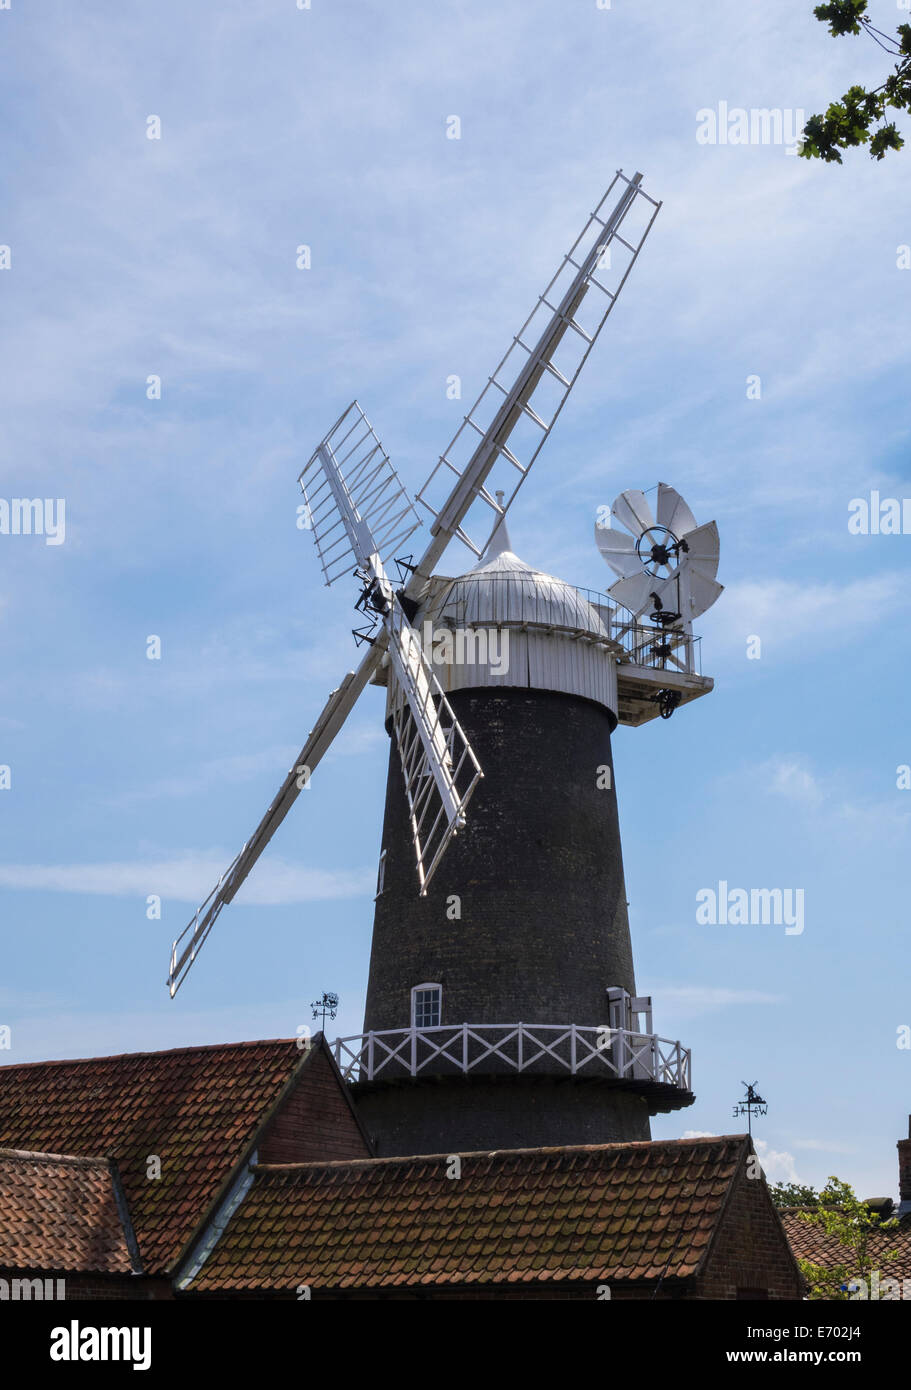 Bircham Windmill, Norfolk, UK Banque D'Images